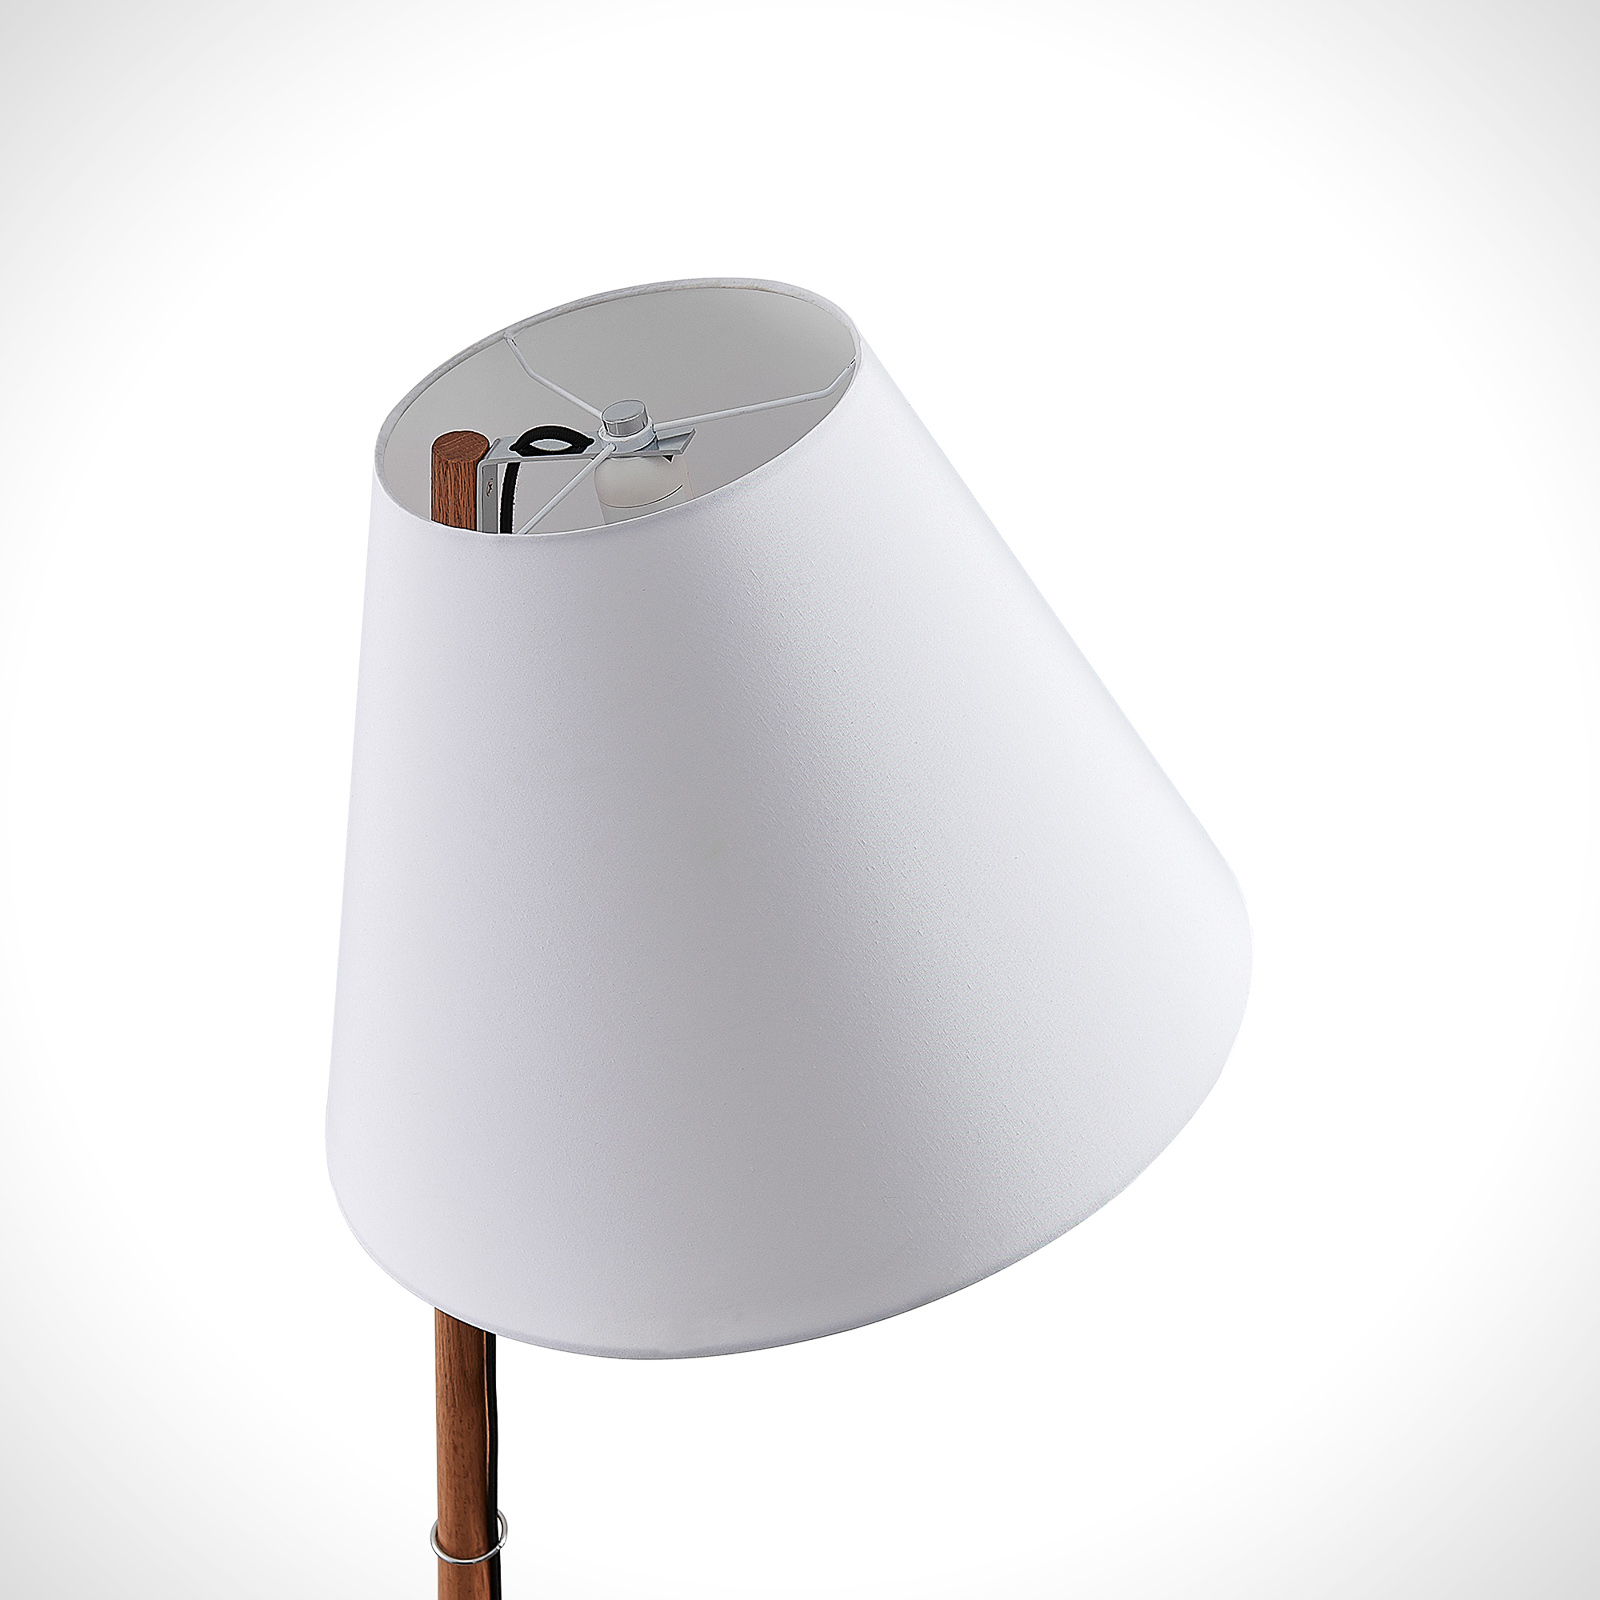 Lucande Jinda lampadaire support bois, tissu blanc